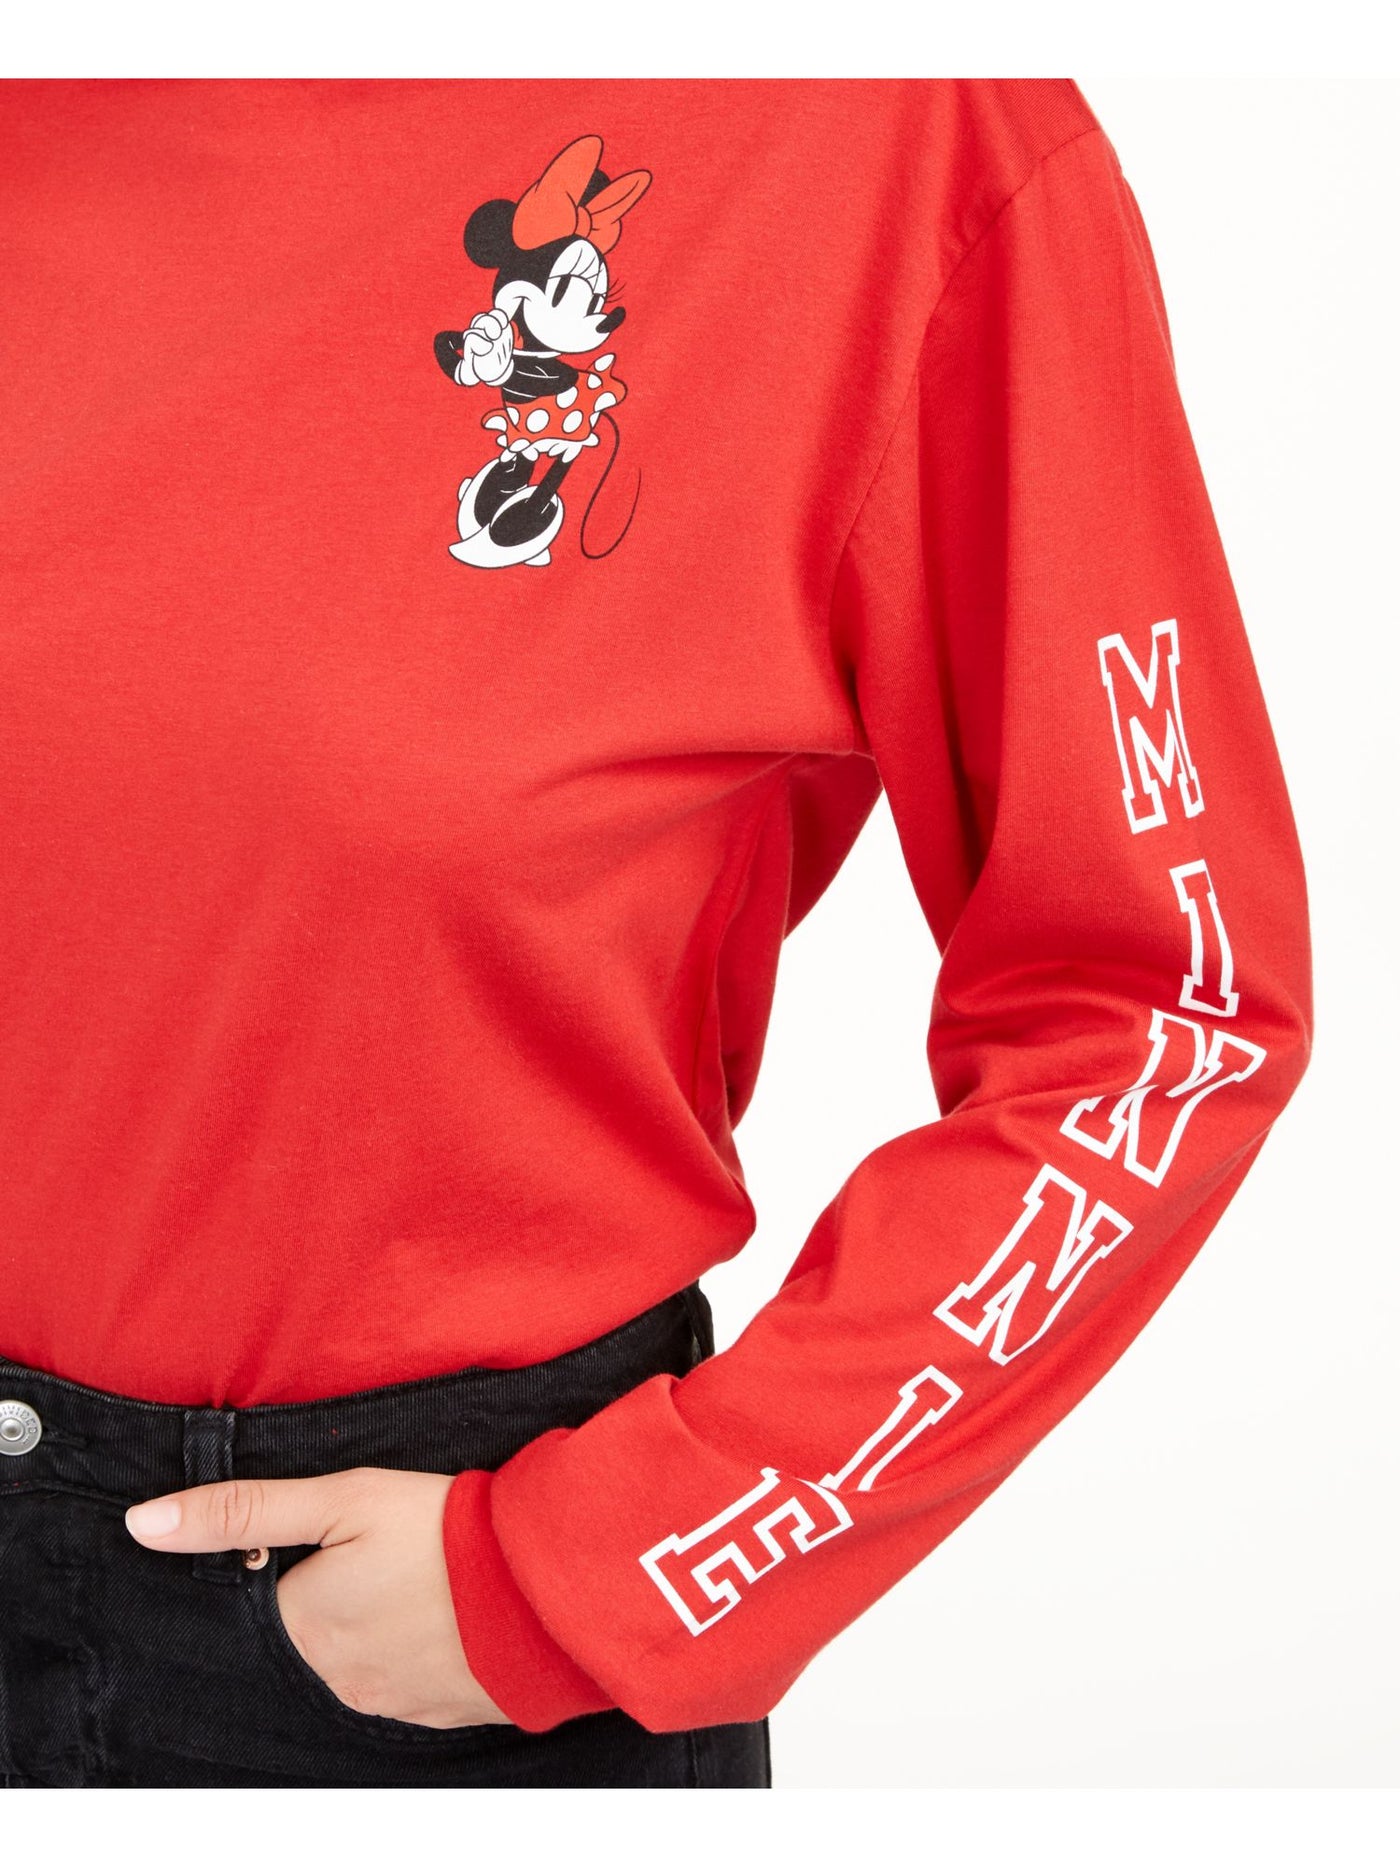 HYBRID APPAREL Womens Red Cotton Long Sleeve Crew Neck Top Juniors XS